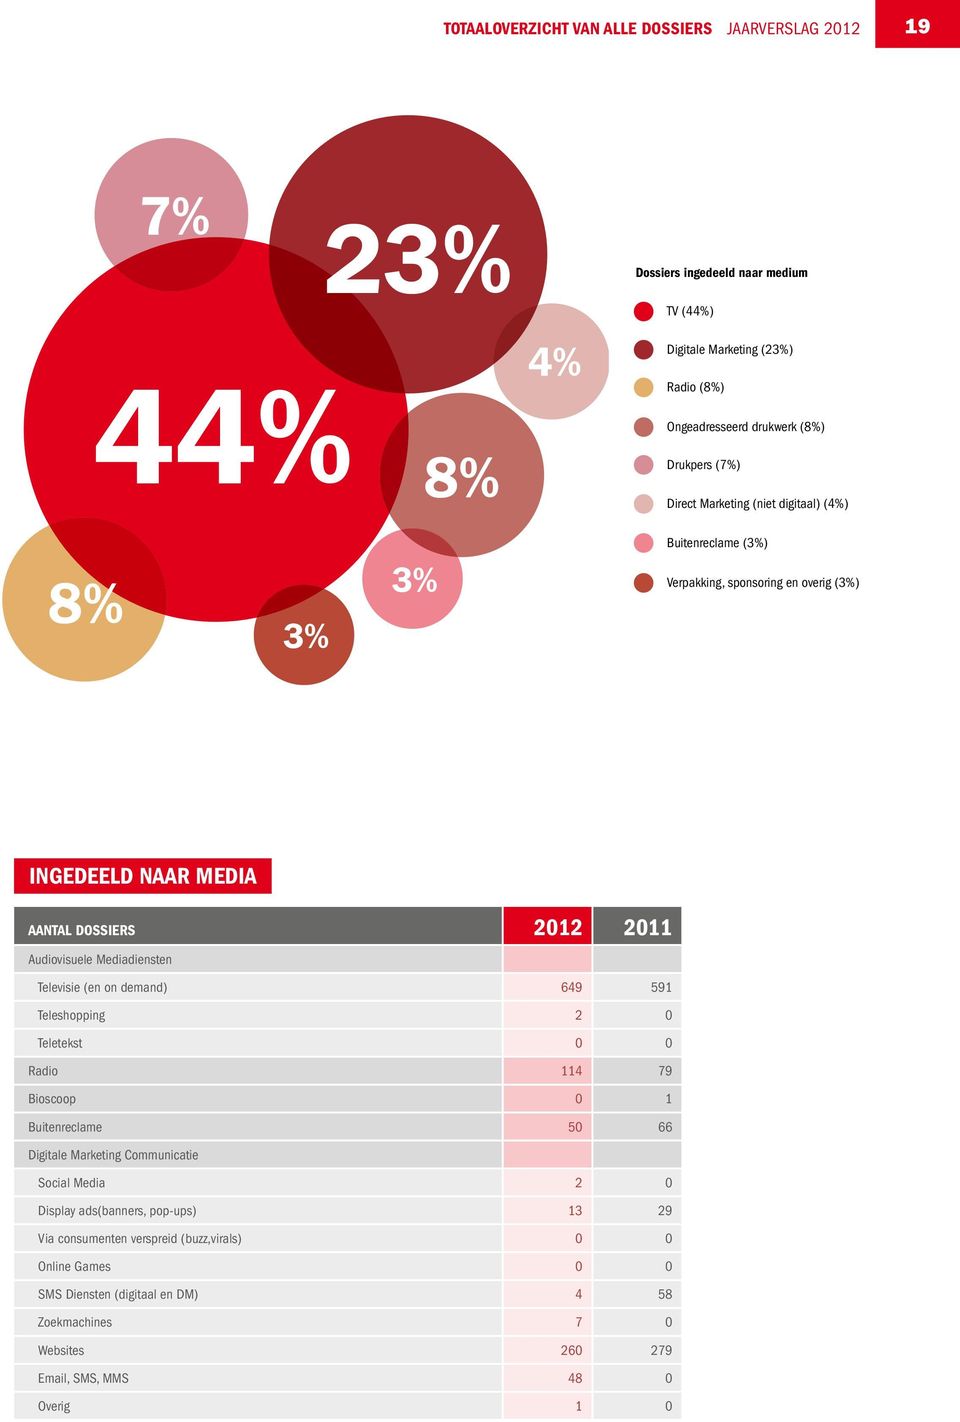 digitaal) (4%) 8% 8% 3% 3% 3% 3% Buitenreclame Buitenreclame (3%) (3%) Verpakking, sponsoring sponsoring en overig en (3%) overig (3%) ingedeeld naar media aantal dossiers 2012 2011 Audiovisuele